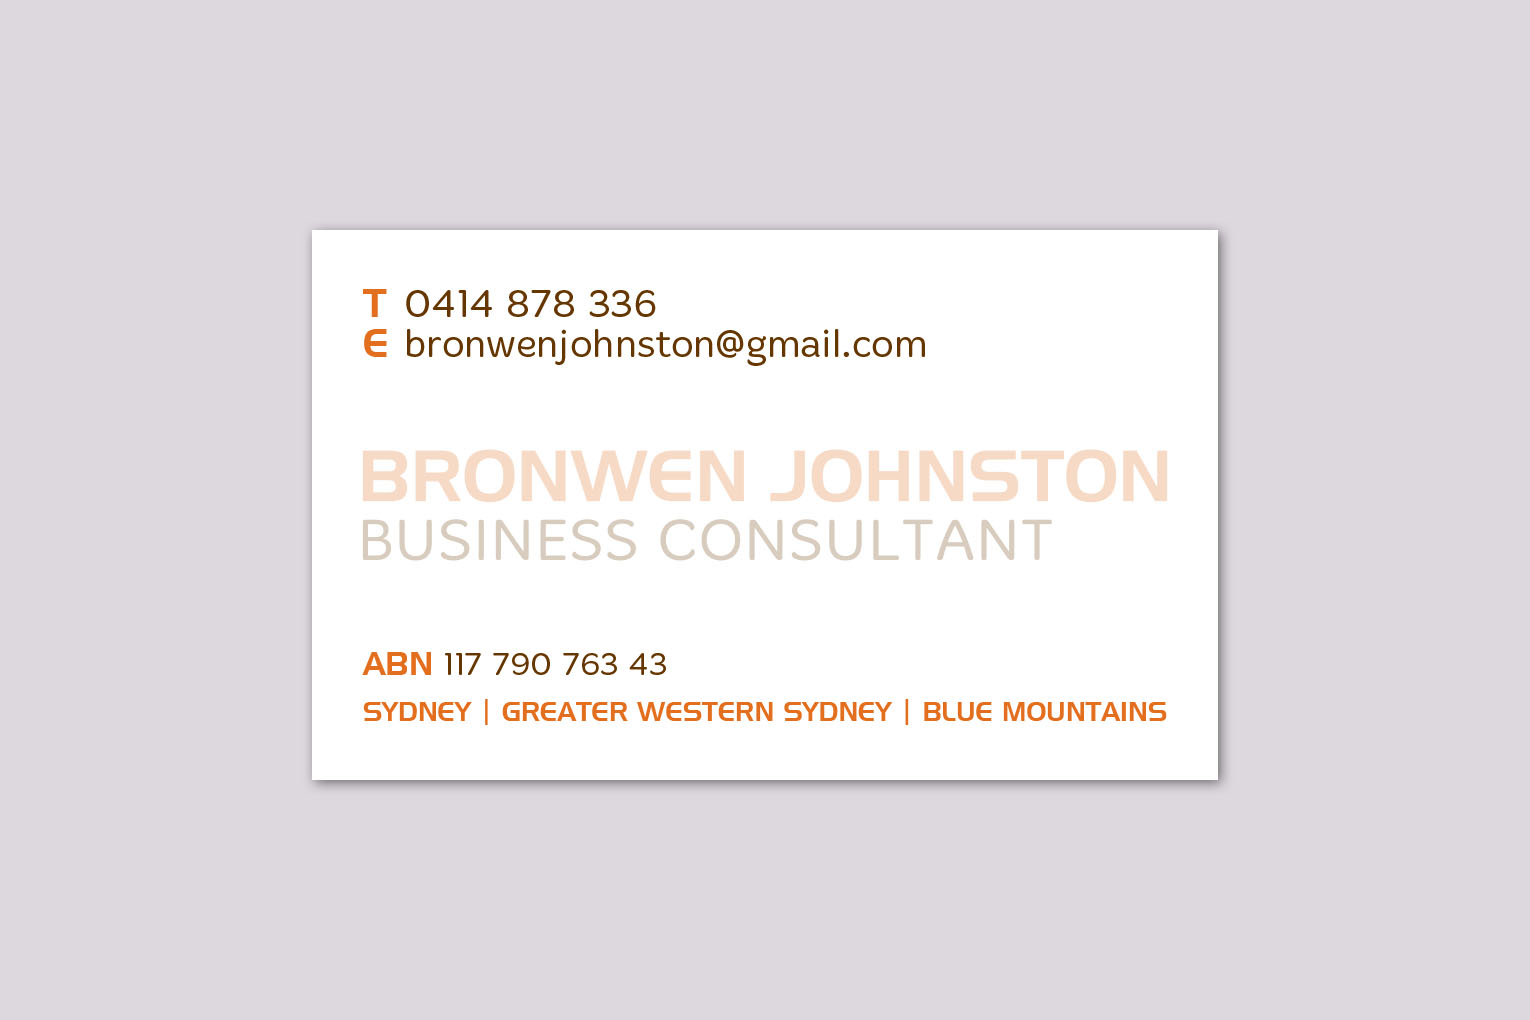 bronwen-johnston-corporate-identity-design-02